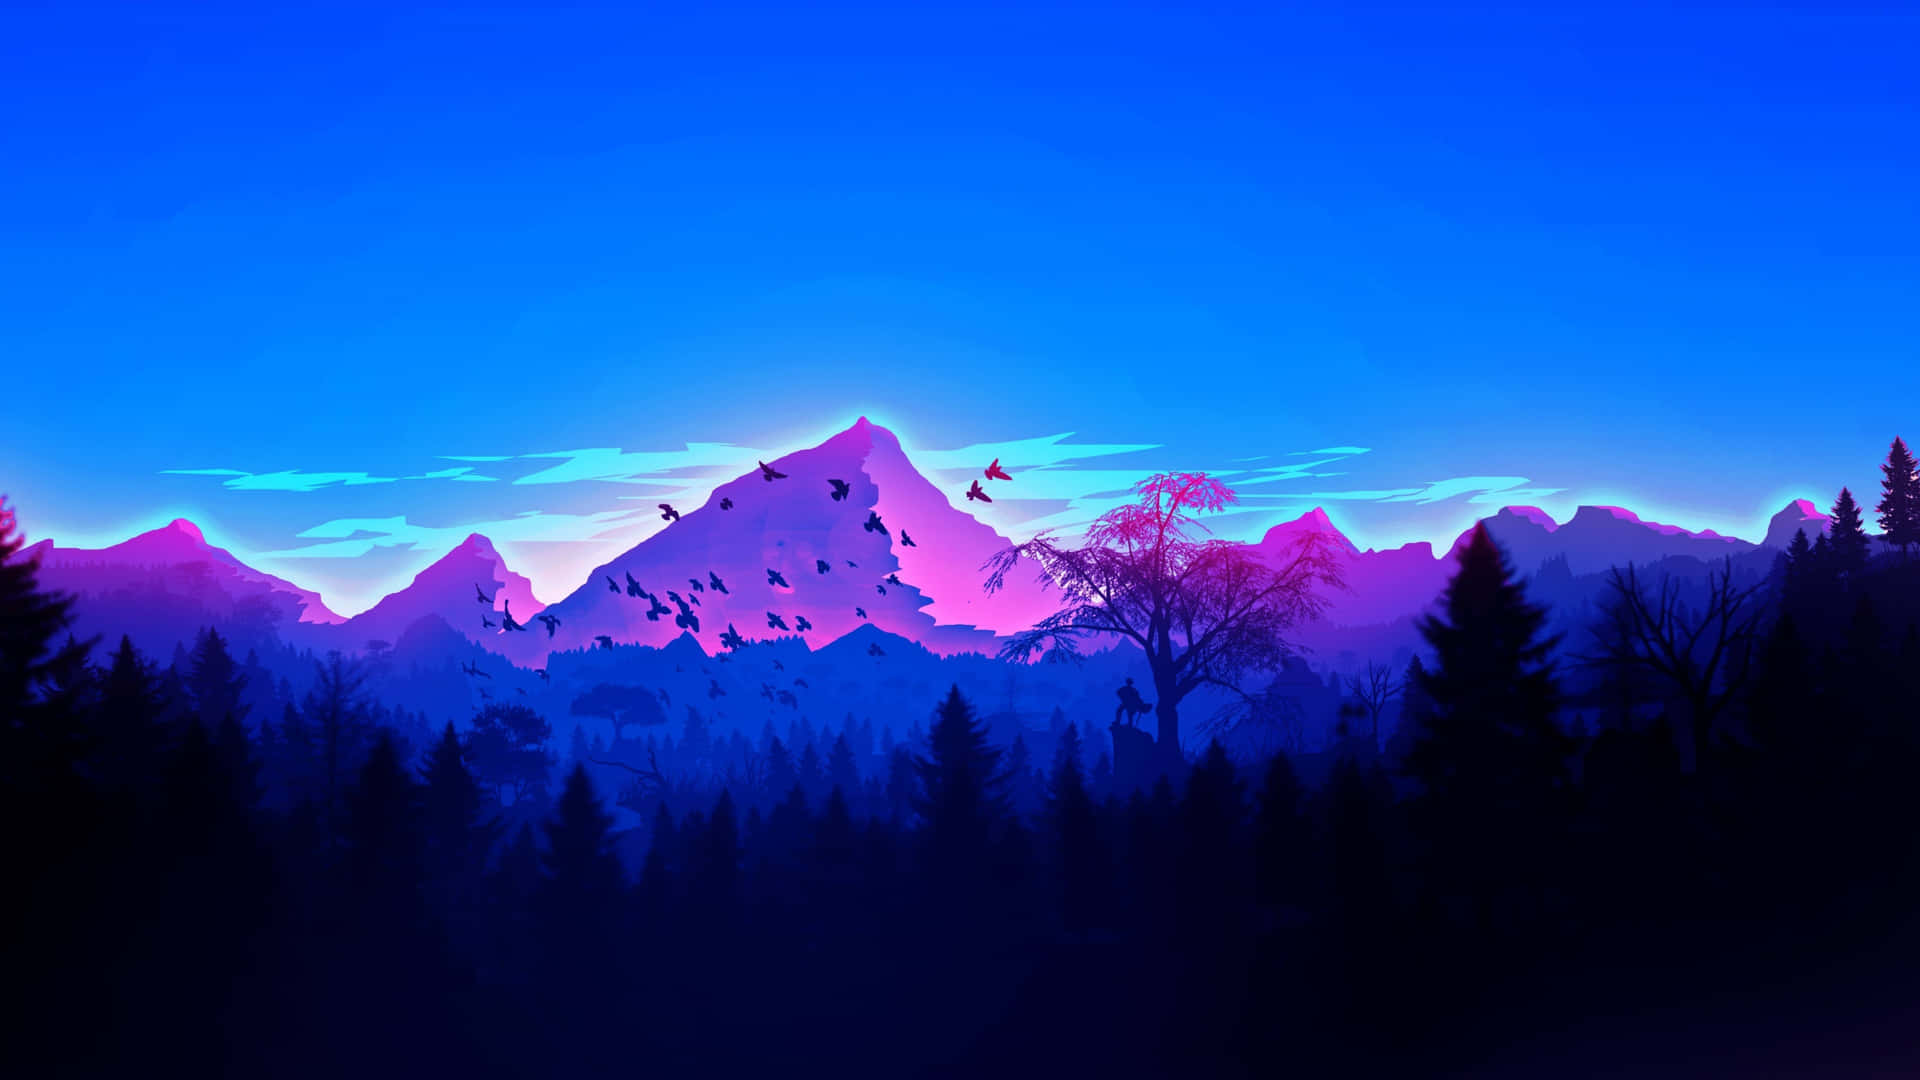 Breathtaking sunrise over a majestic mountain range